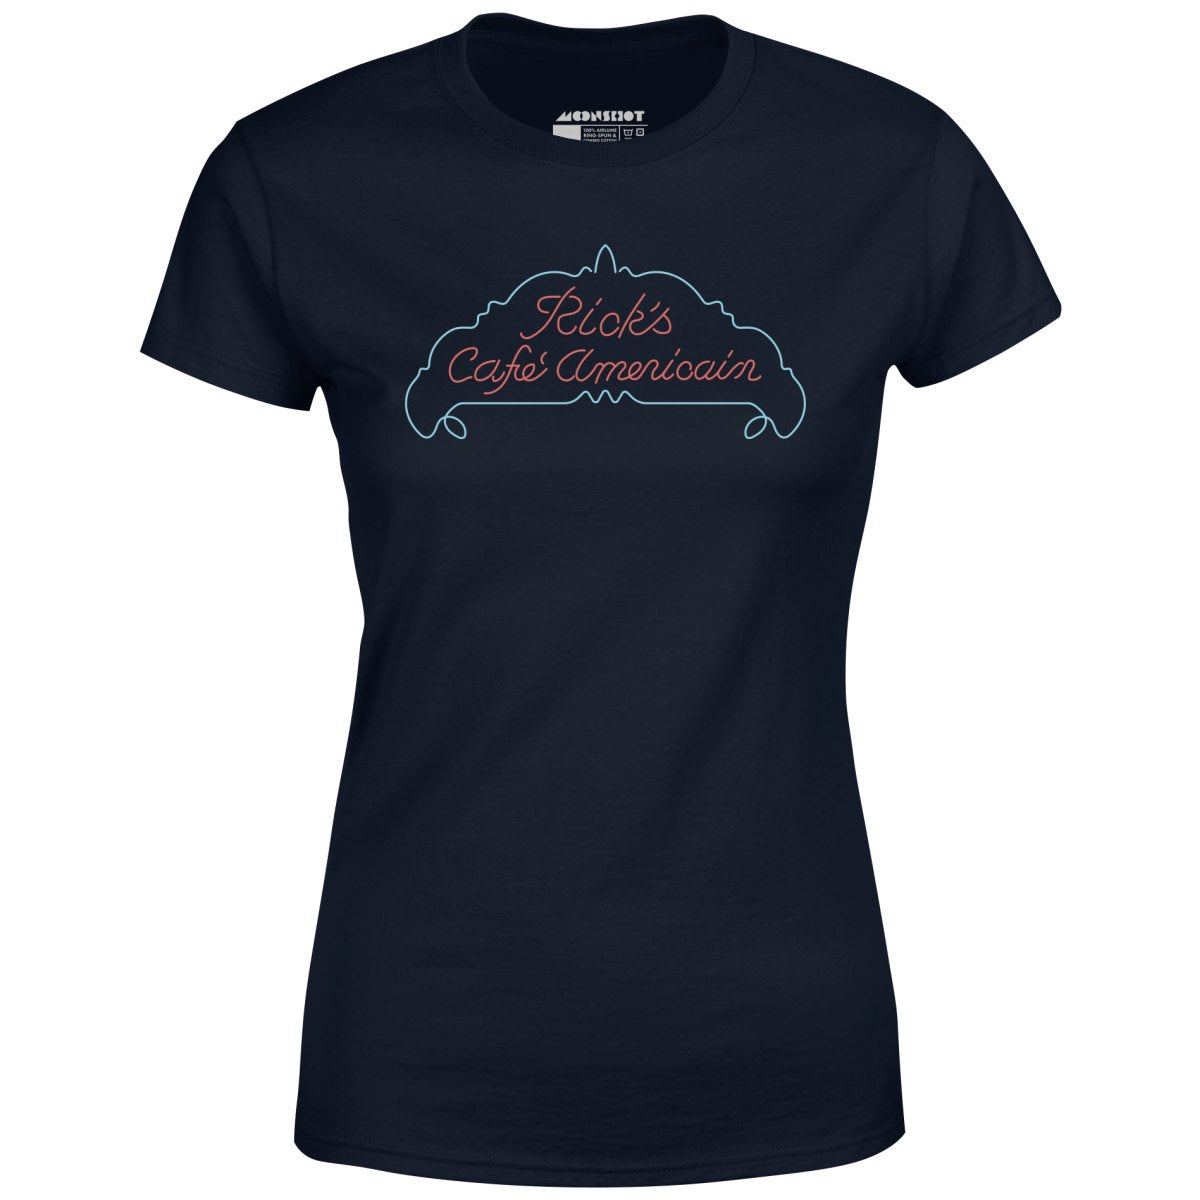 Casablanca - Rick's Cafe Americain - Women's T-Shirt